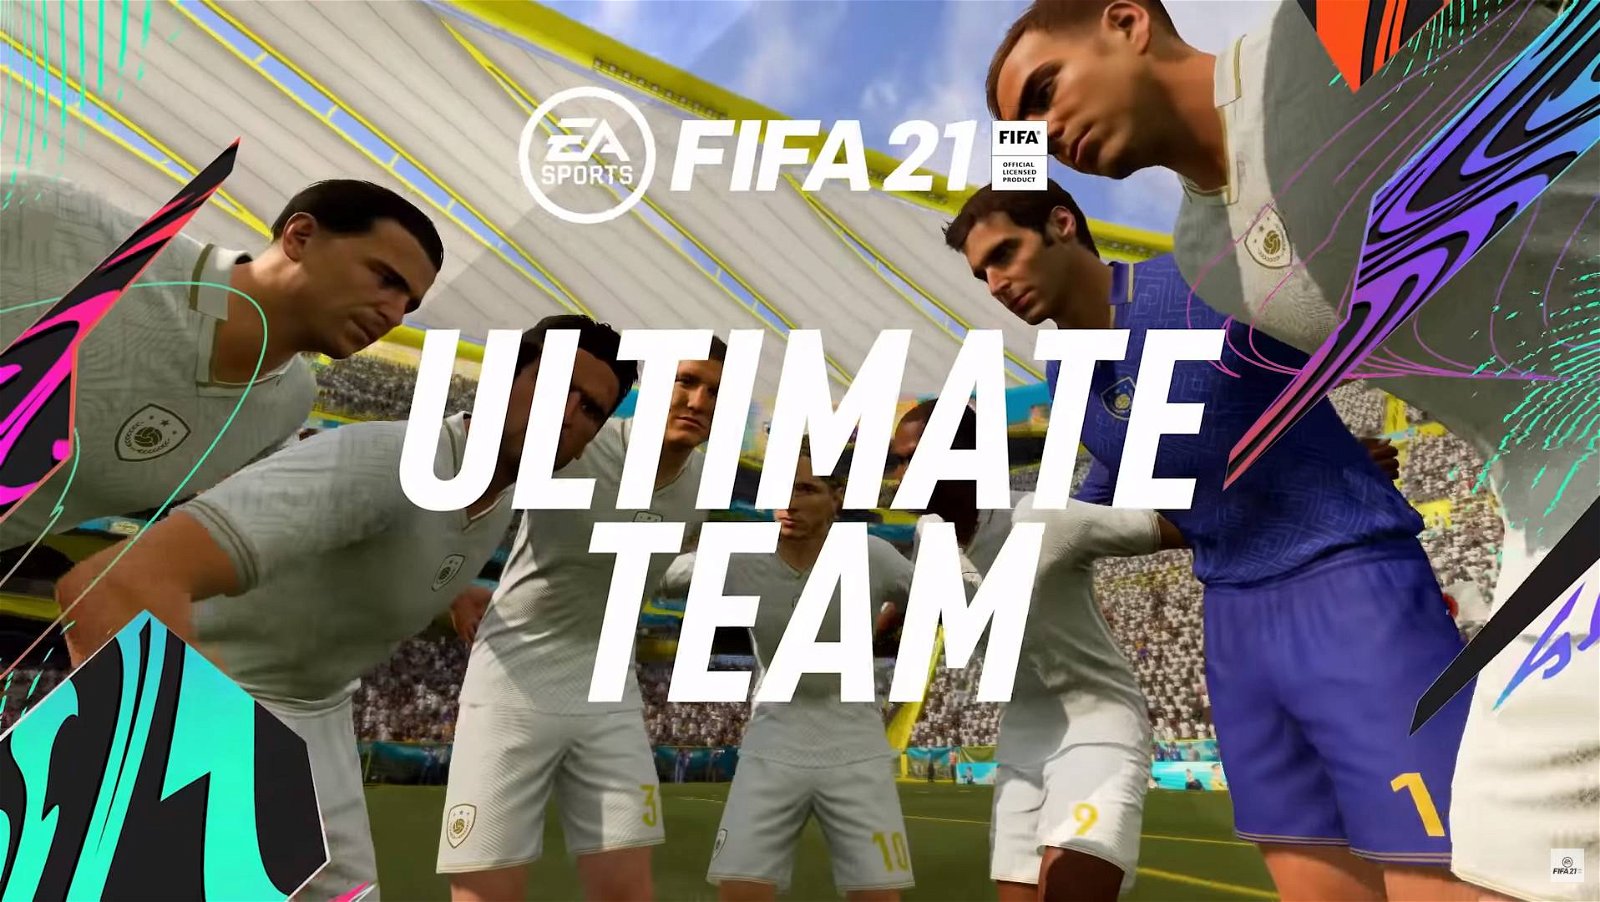 Immagine di FIFA 21: guadagni record, EA è ricca grazie a Ultimate Team